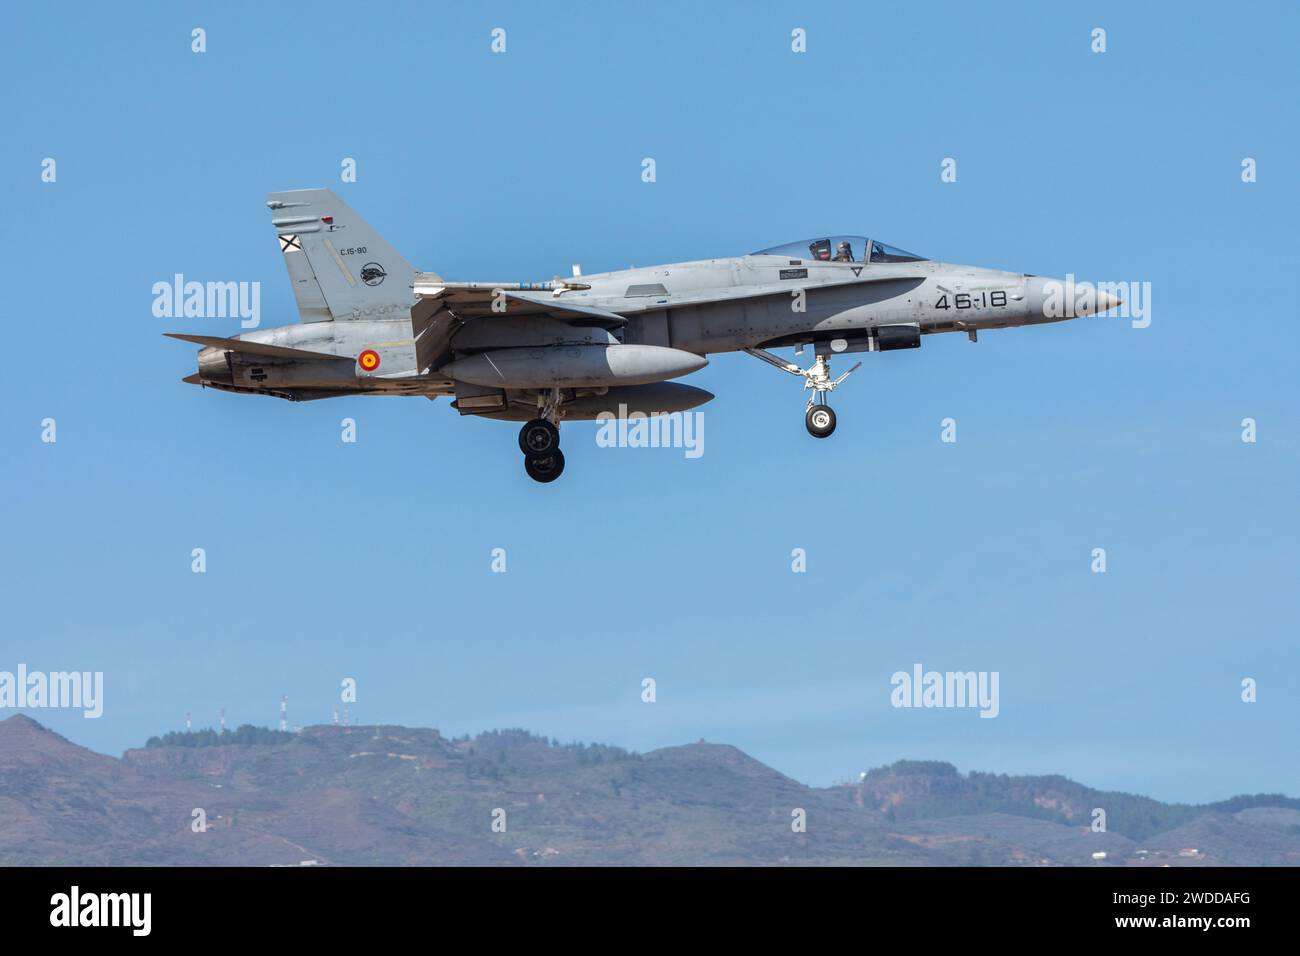 F-18 fighter plane landing Stock Photo